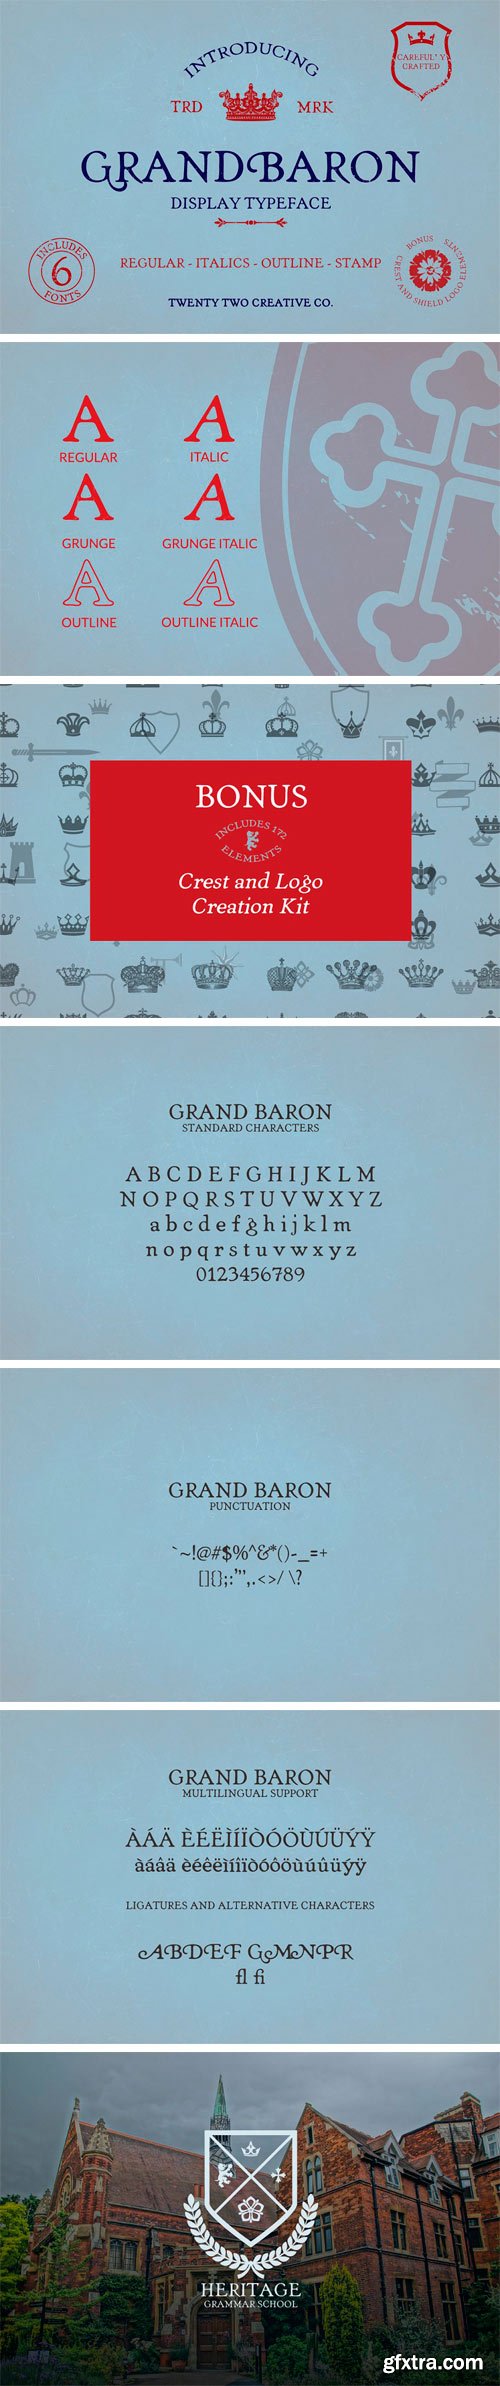 CM - Grand Baron - A Vintage Typeface 3377110